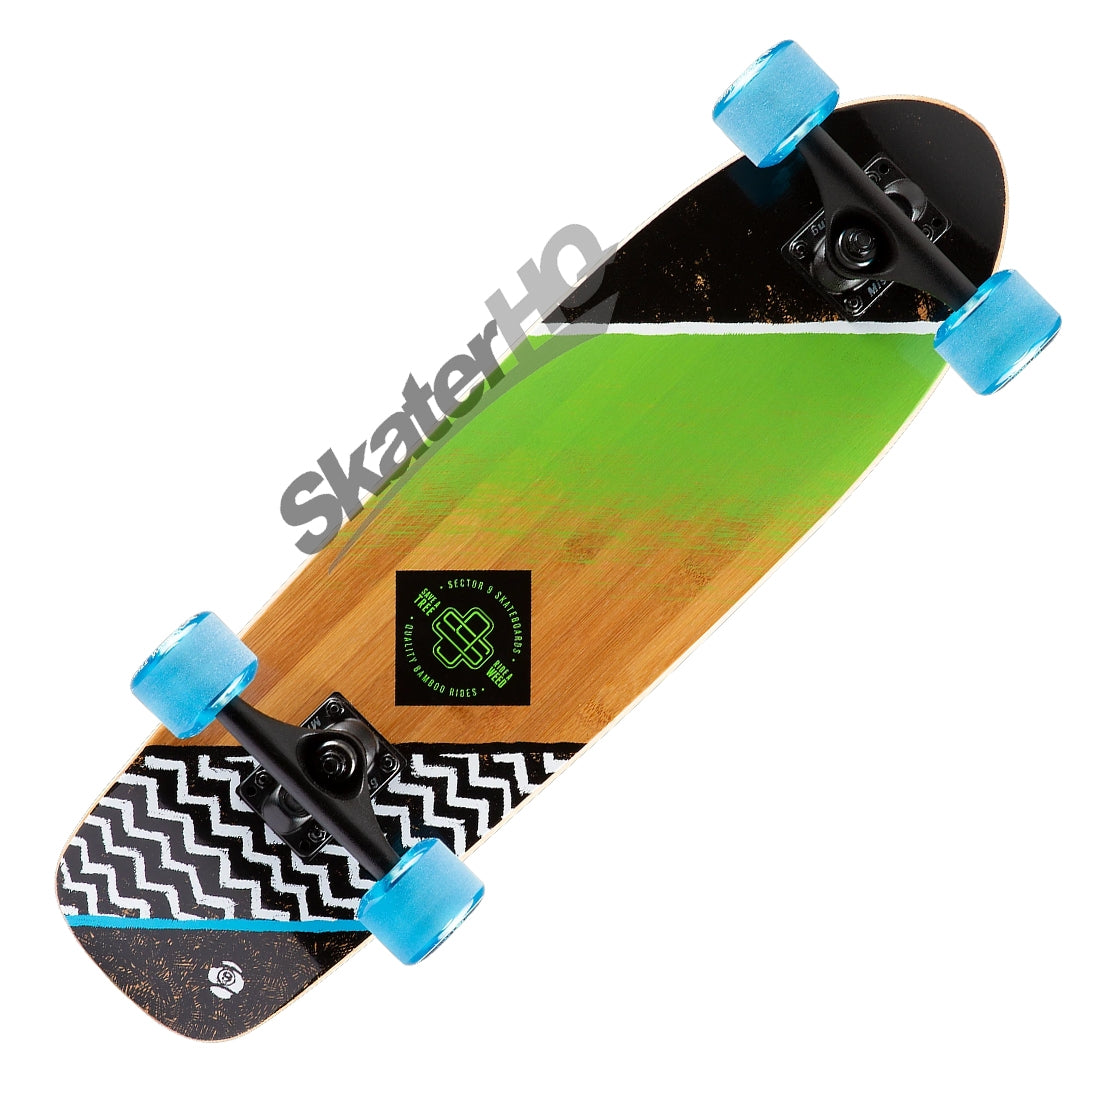 Sector 9 Zag Bambino 26.5 Complete - Bamboo/Blue Skateboard Compl Cruisers